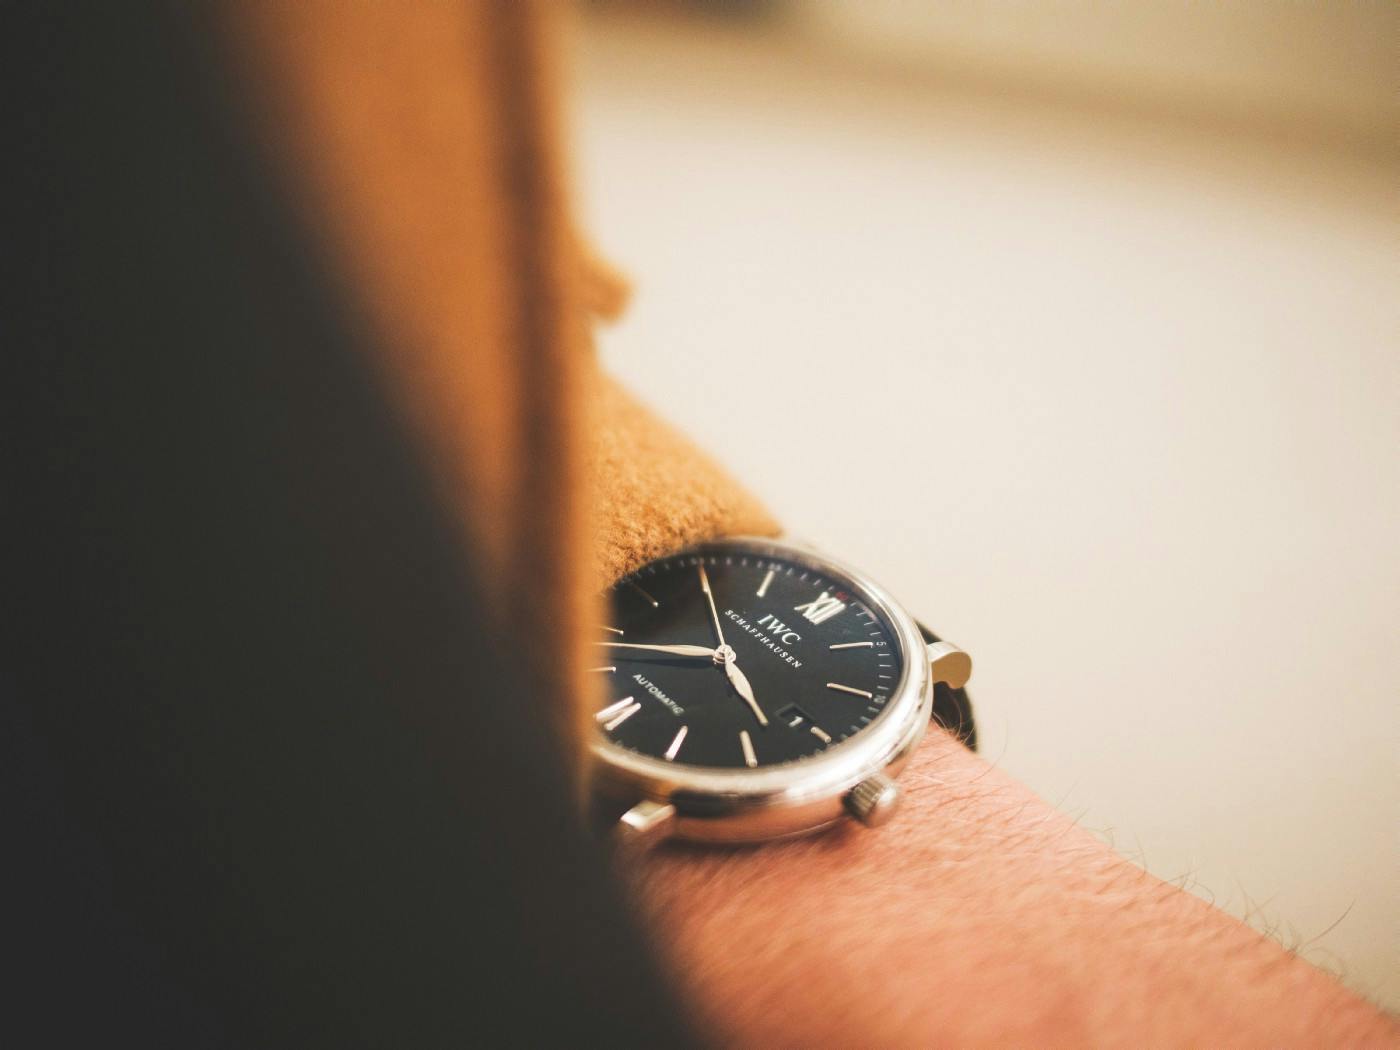 a watch on someone's wrist